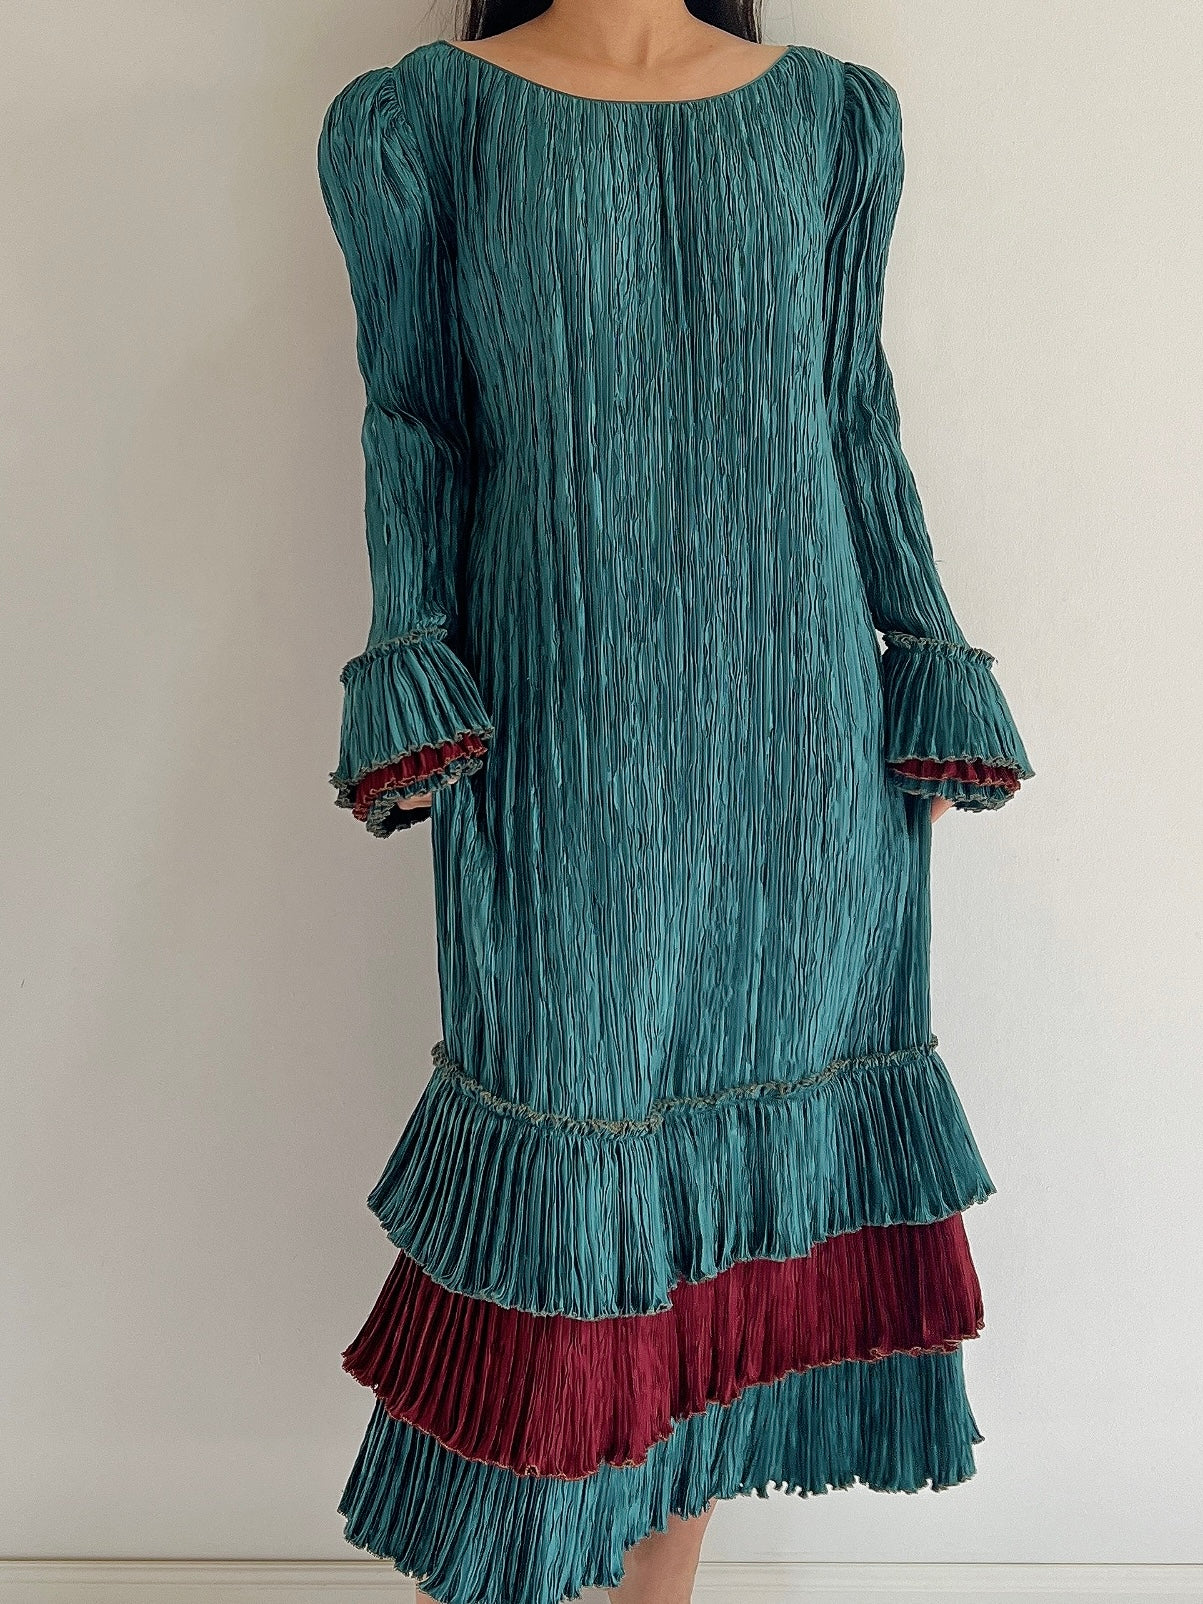 Vintage Mary McFadden Teal Layered Dress - M/L